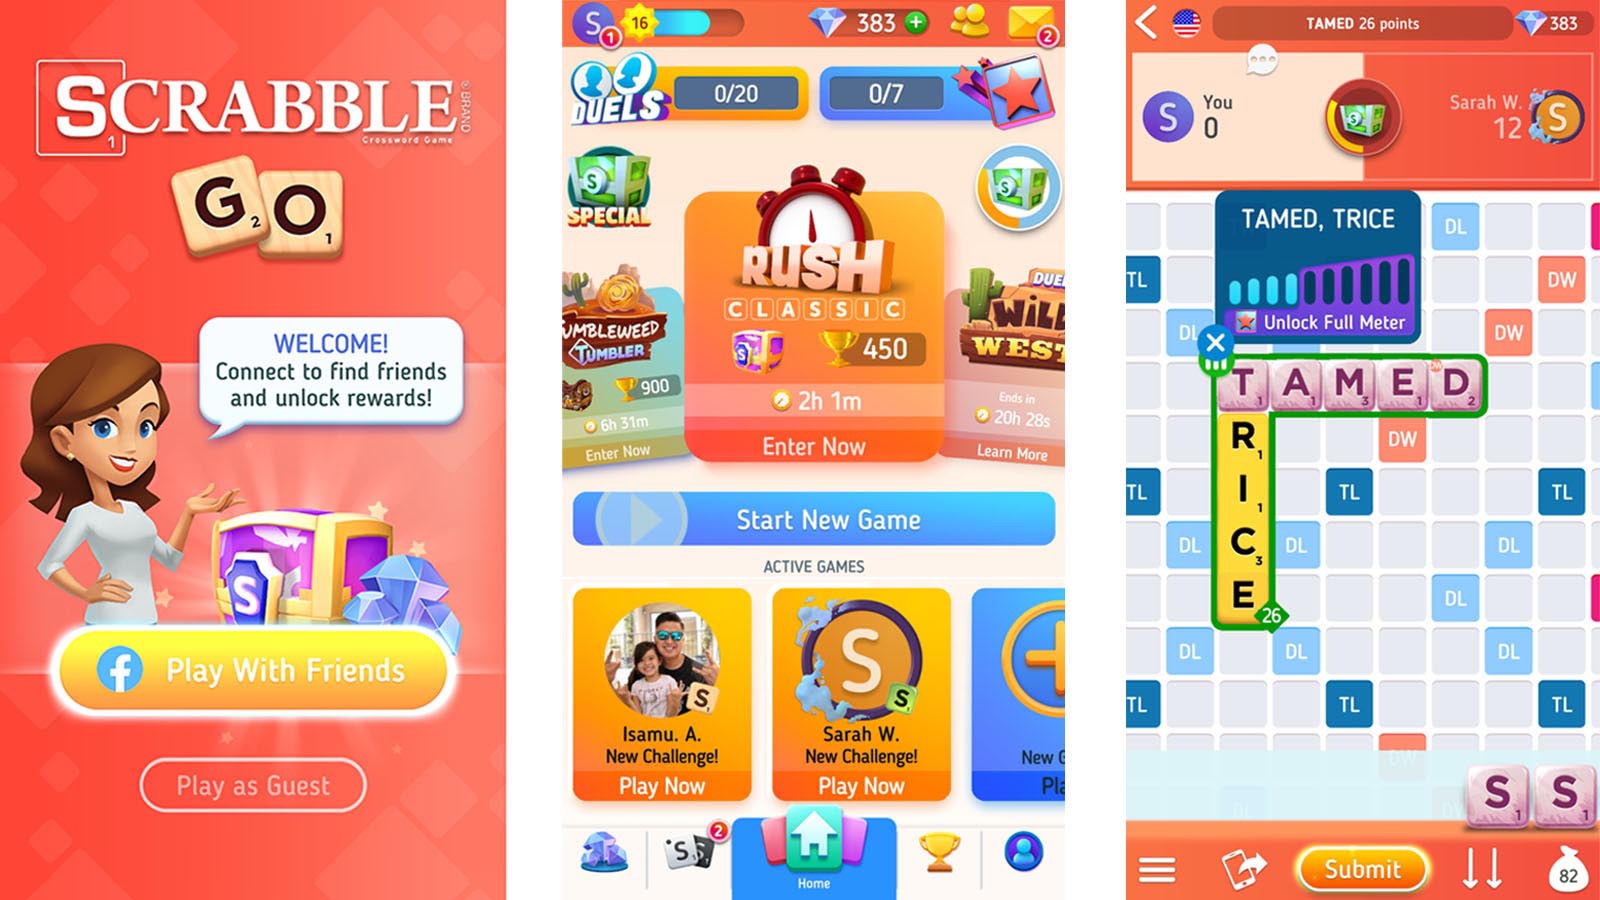 Scrabble Go game screenshots